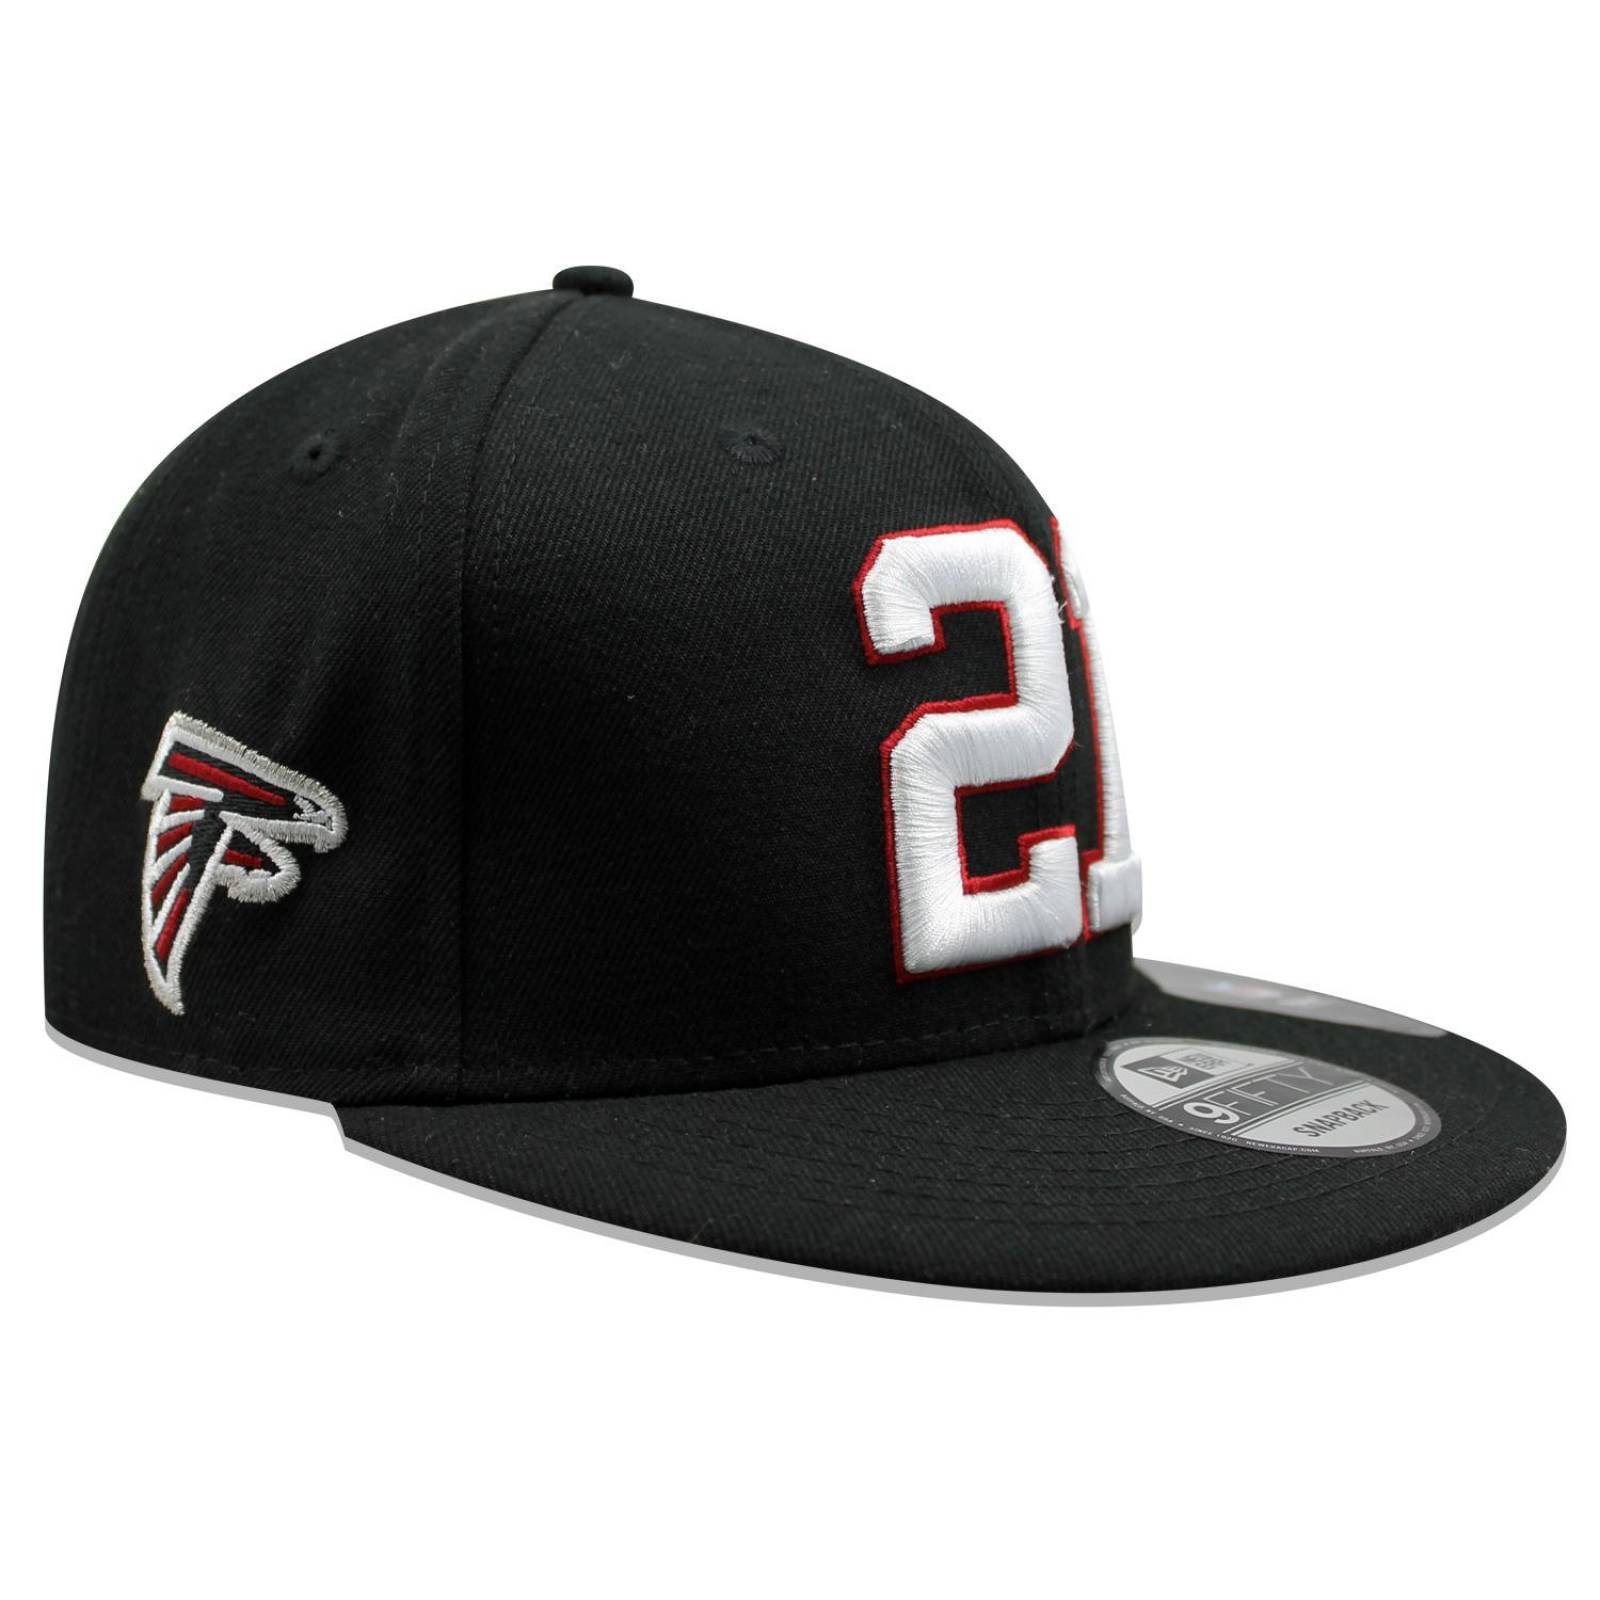 Gorra New Era 9 Fifty Falcons NFL Number Jerz Negro 